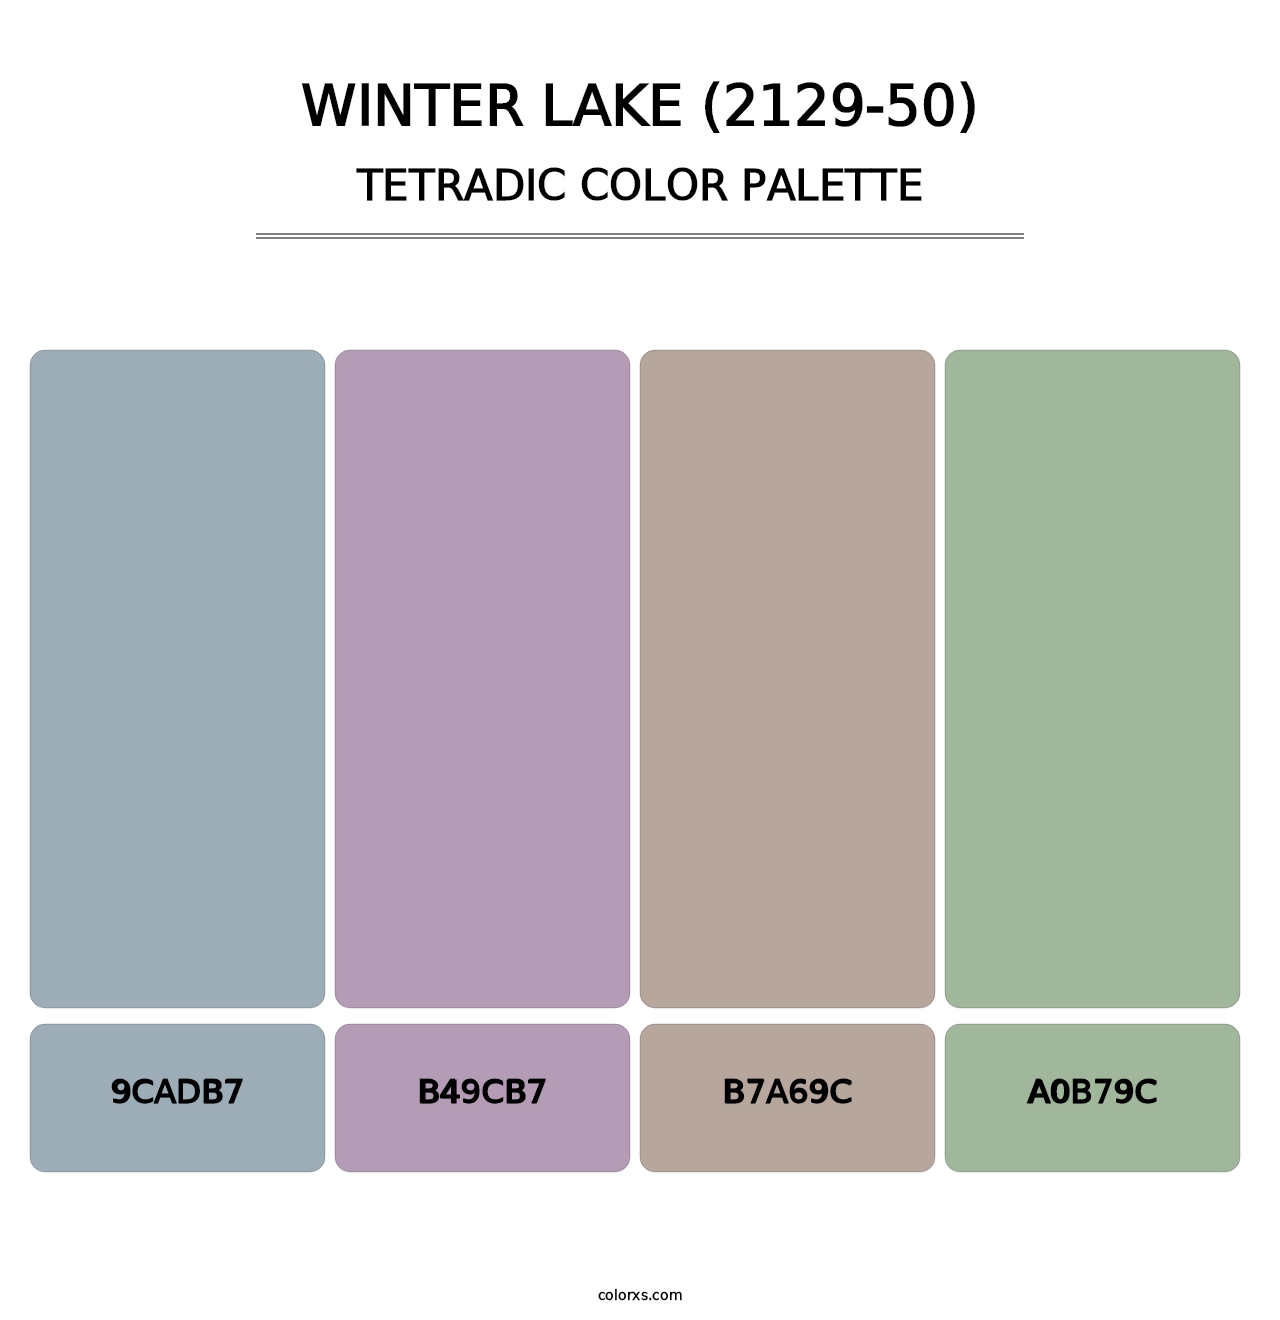 Winter Lake (2129-50) - Tetradic Color Palette